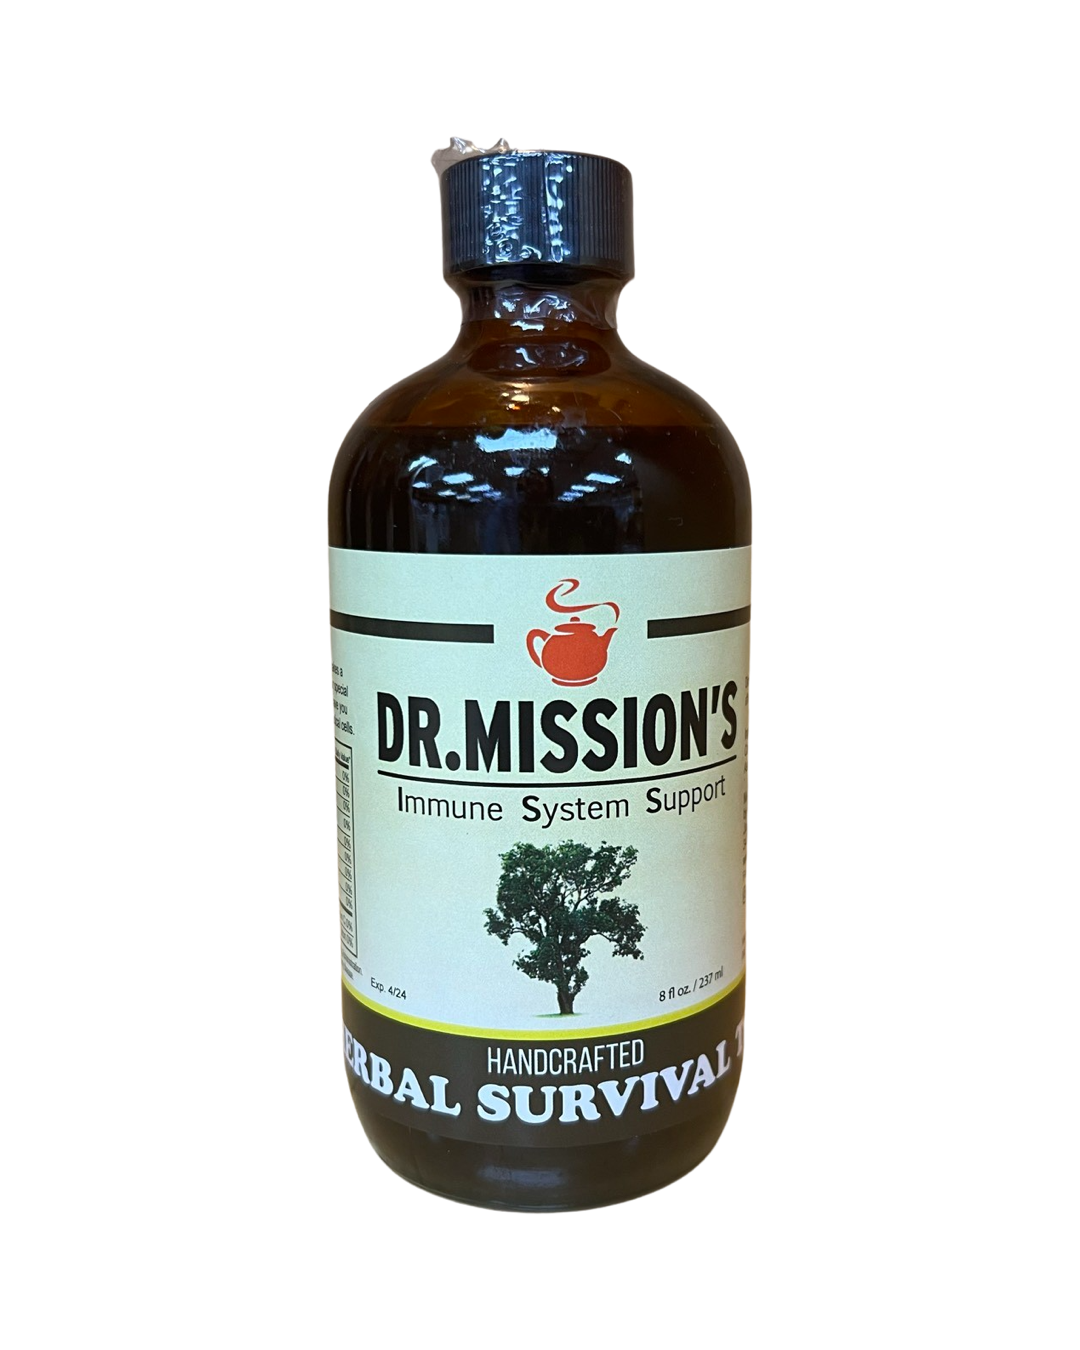 Dr. Mission’s Immune System Support Herbal Survival Tea 8oz